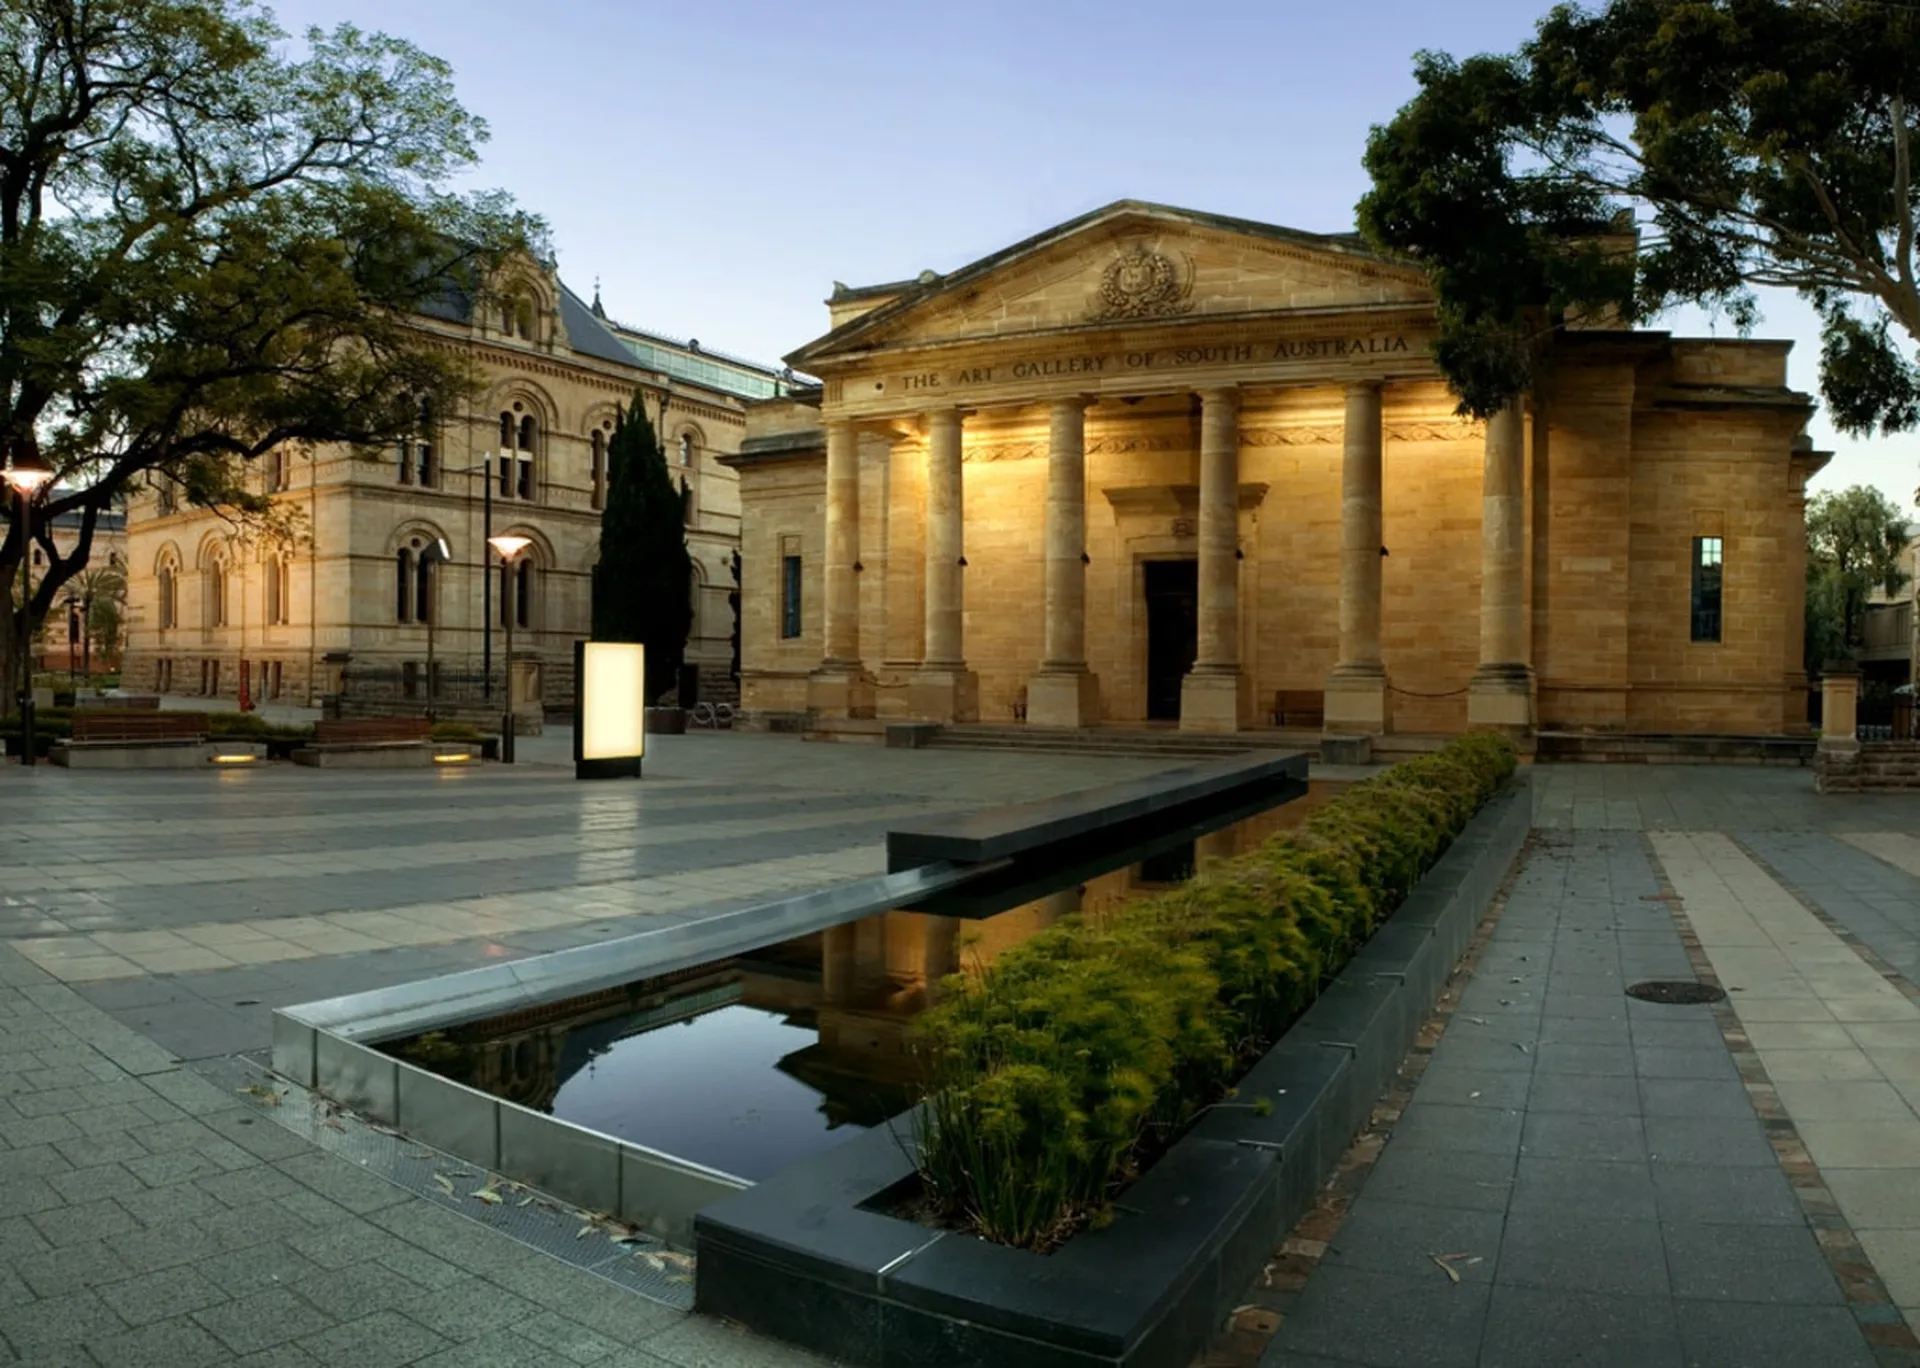 Explore Art Gallery of South Australia 